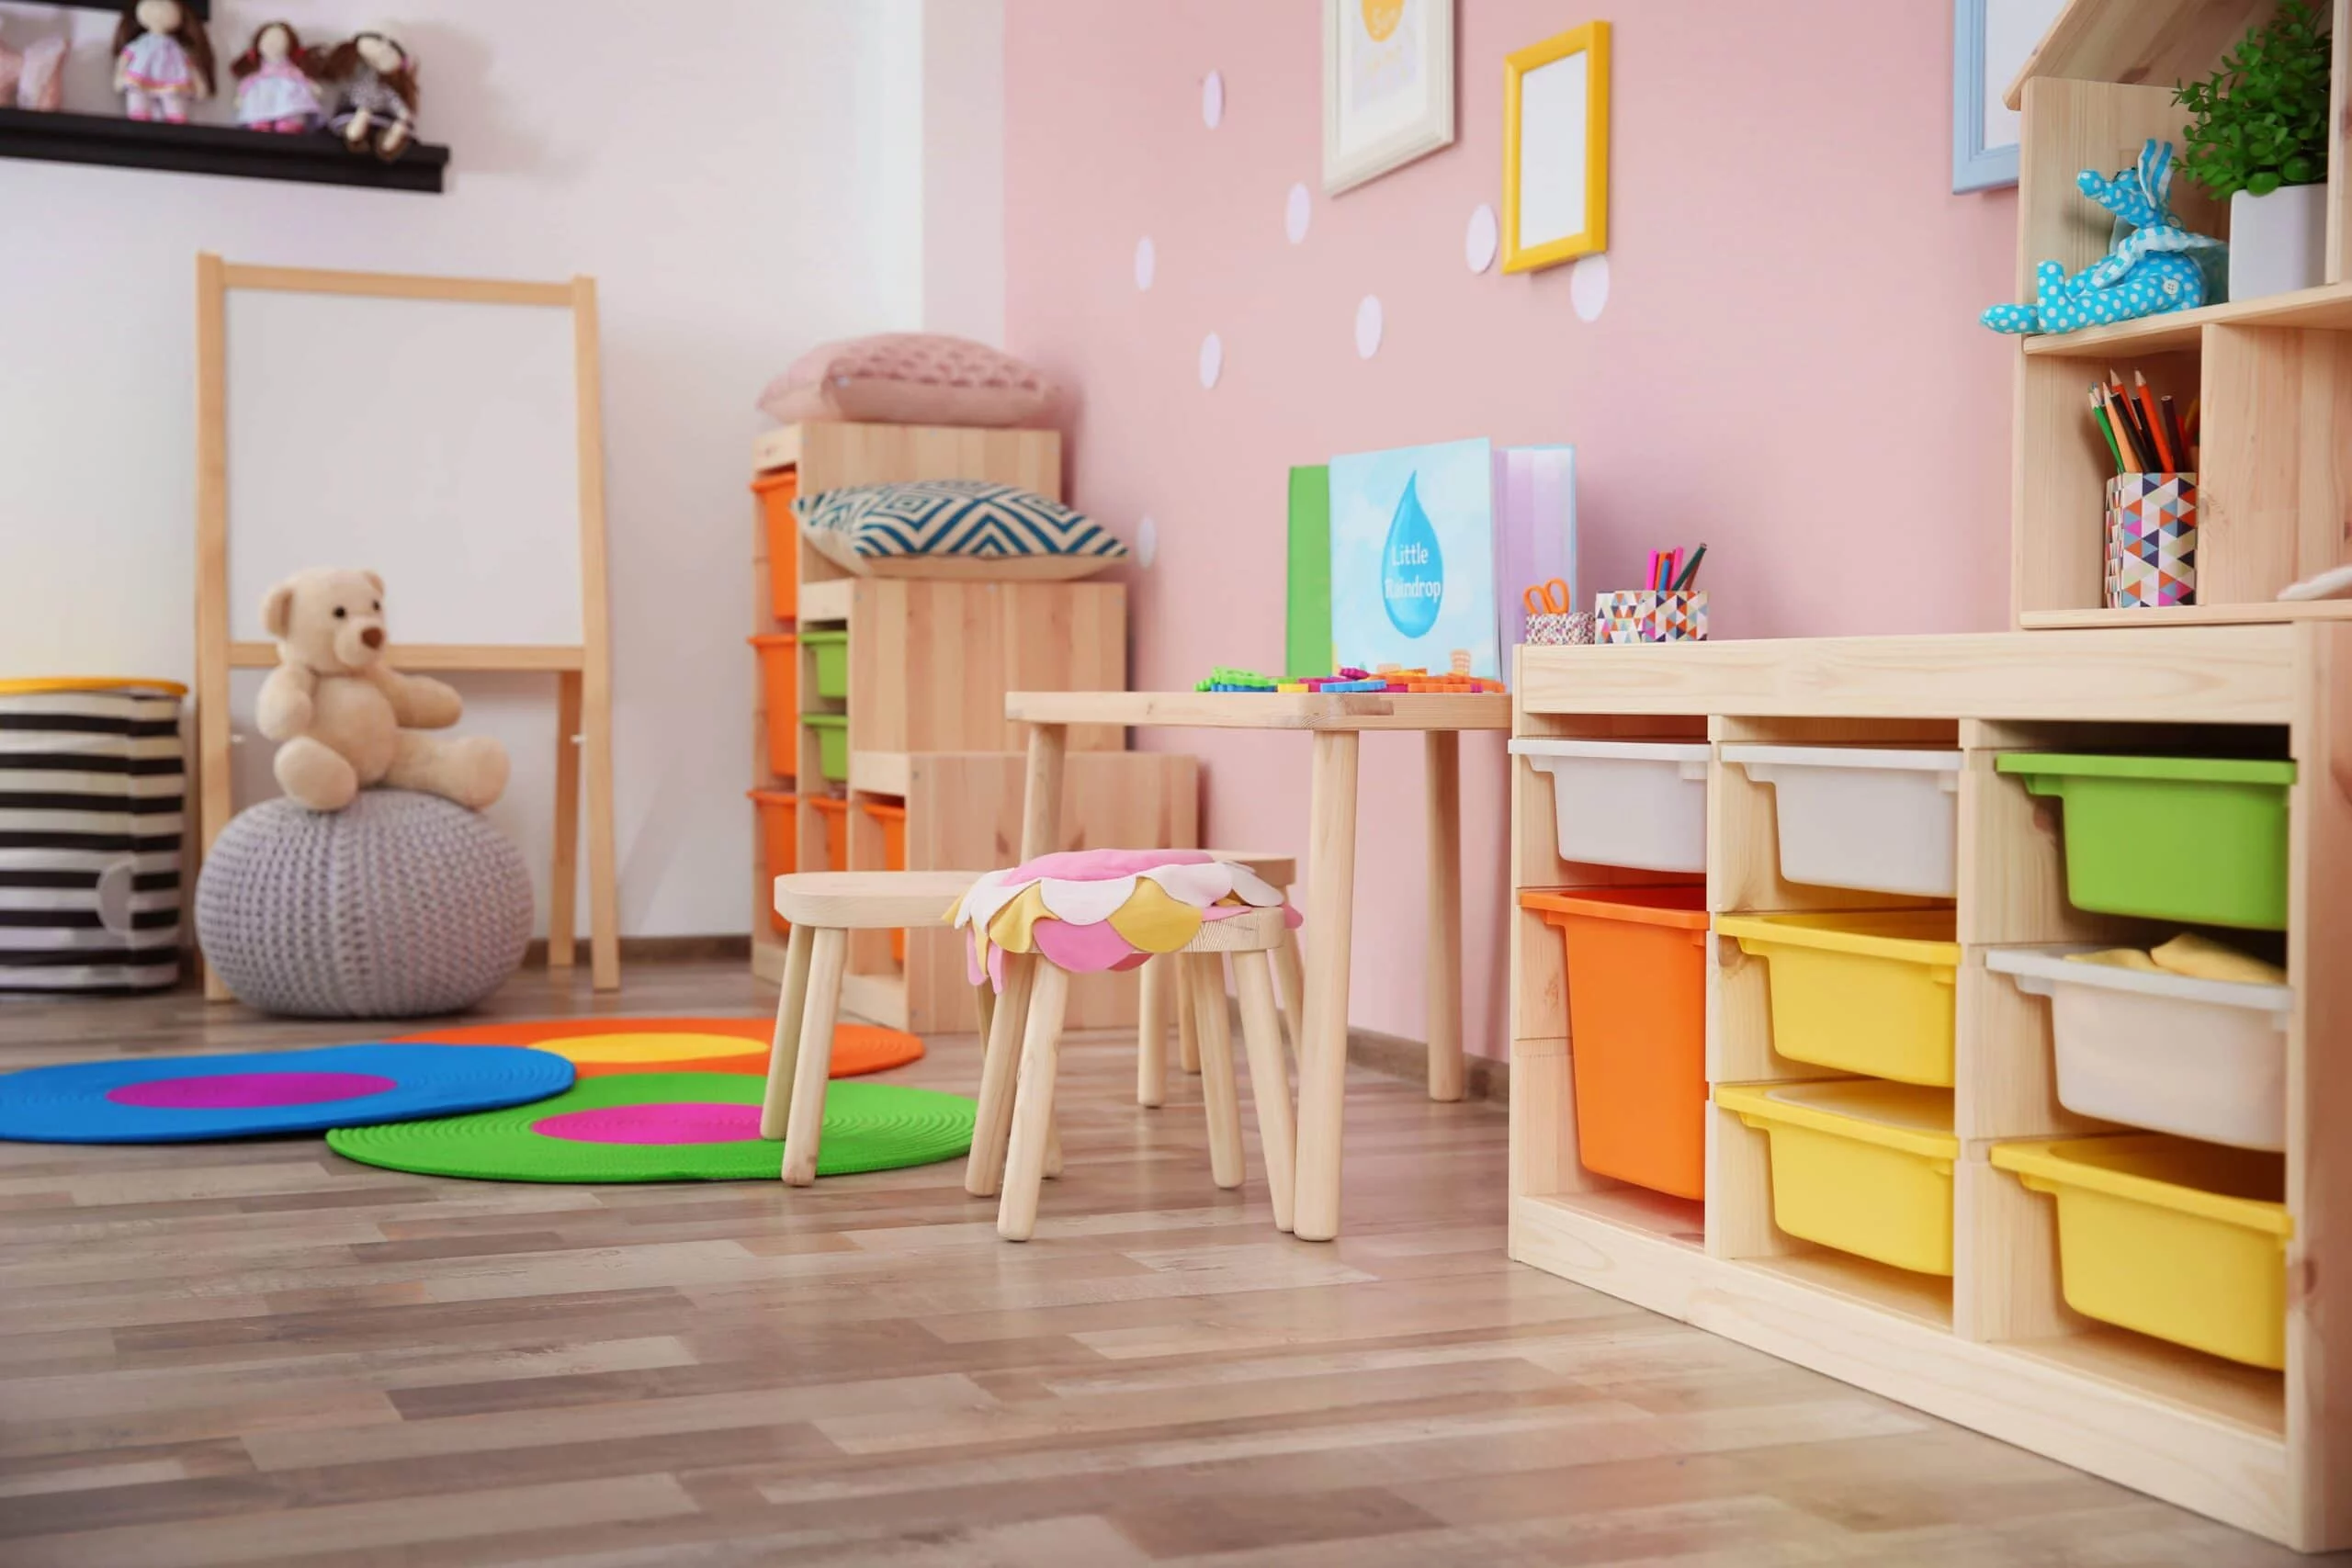 Daycare Floor Plan Design 1 Childcare Design Guide Free